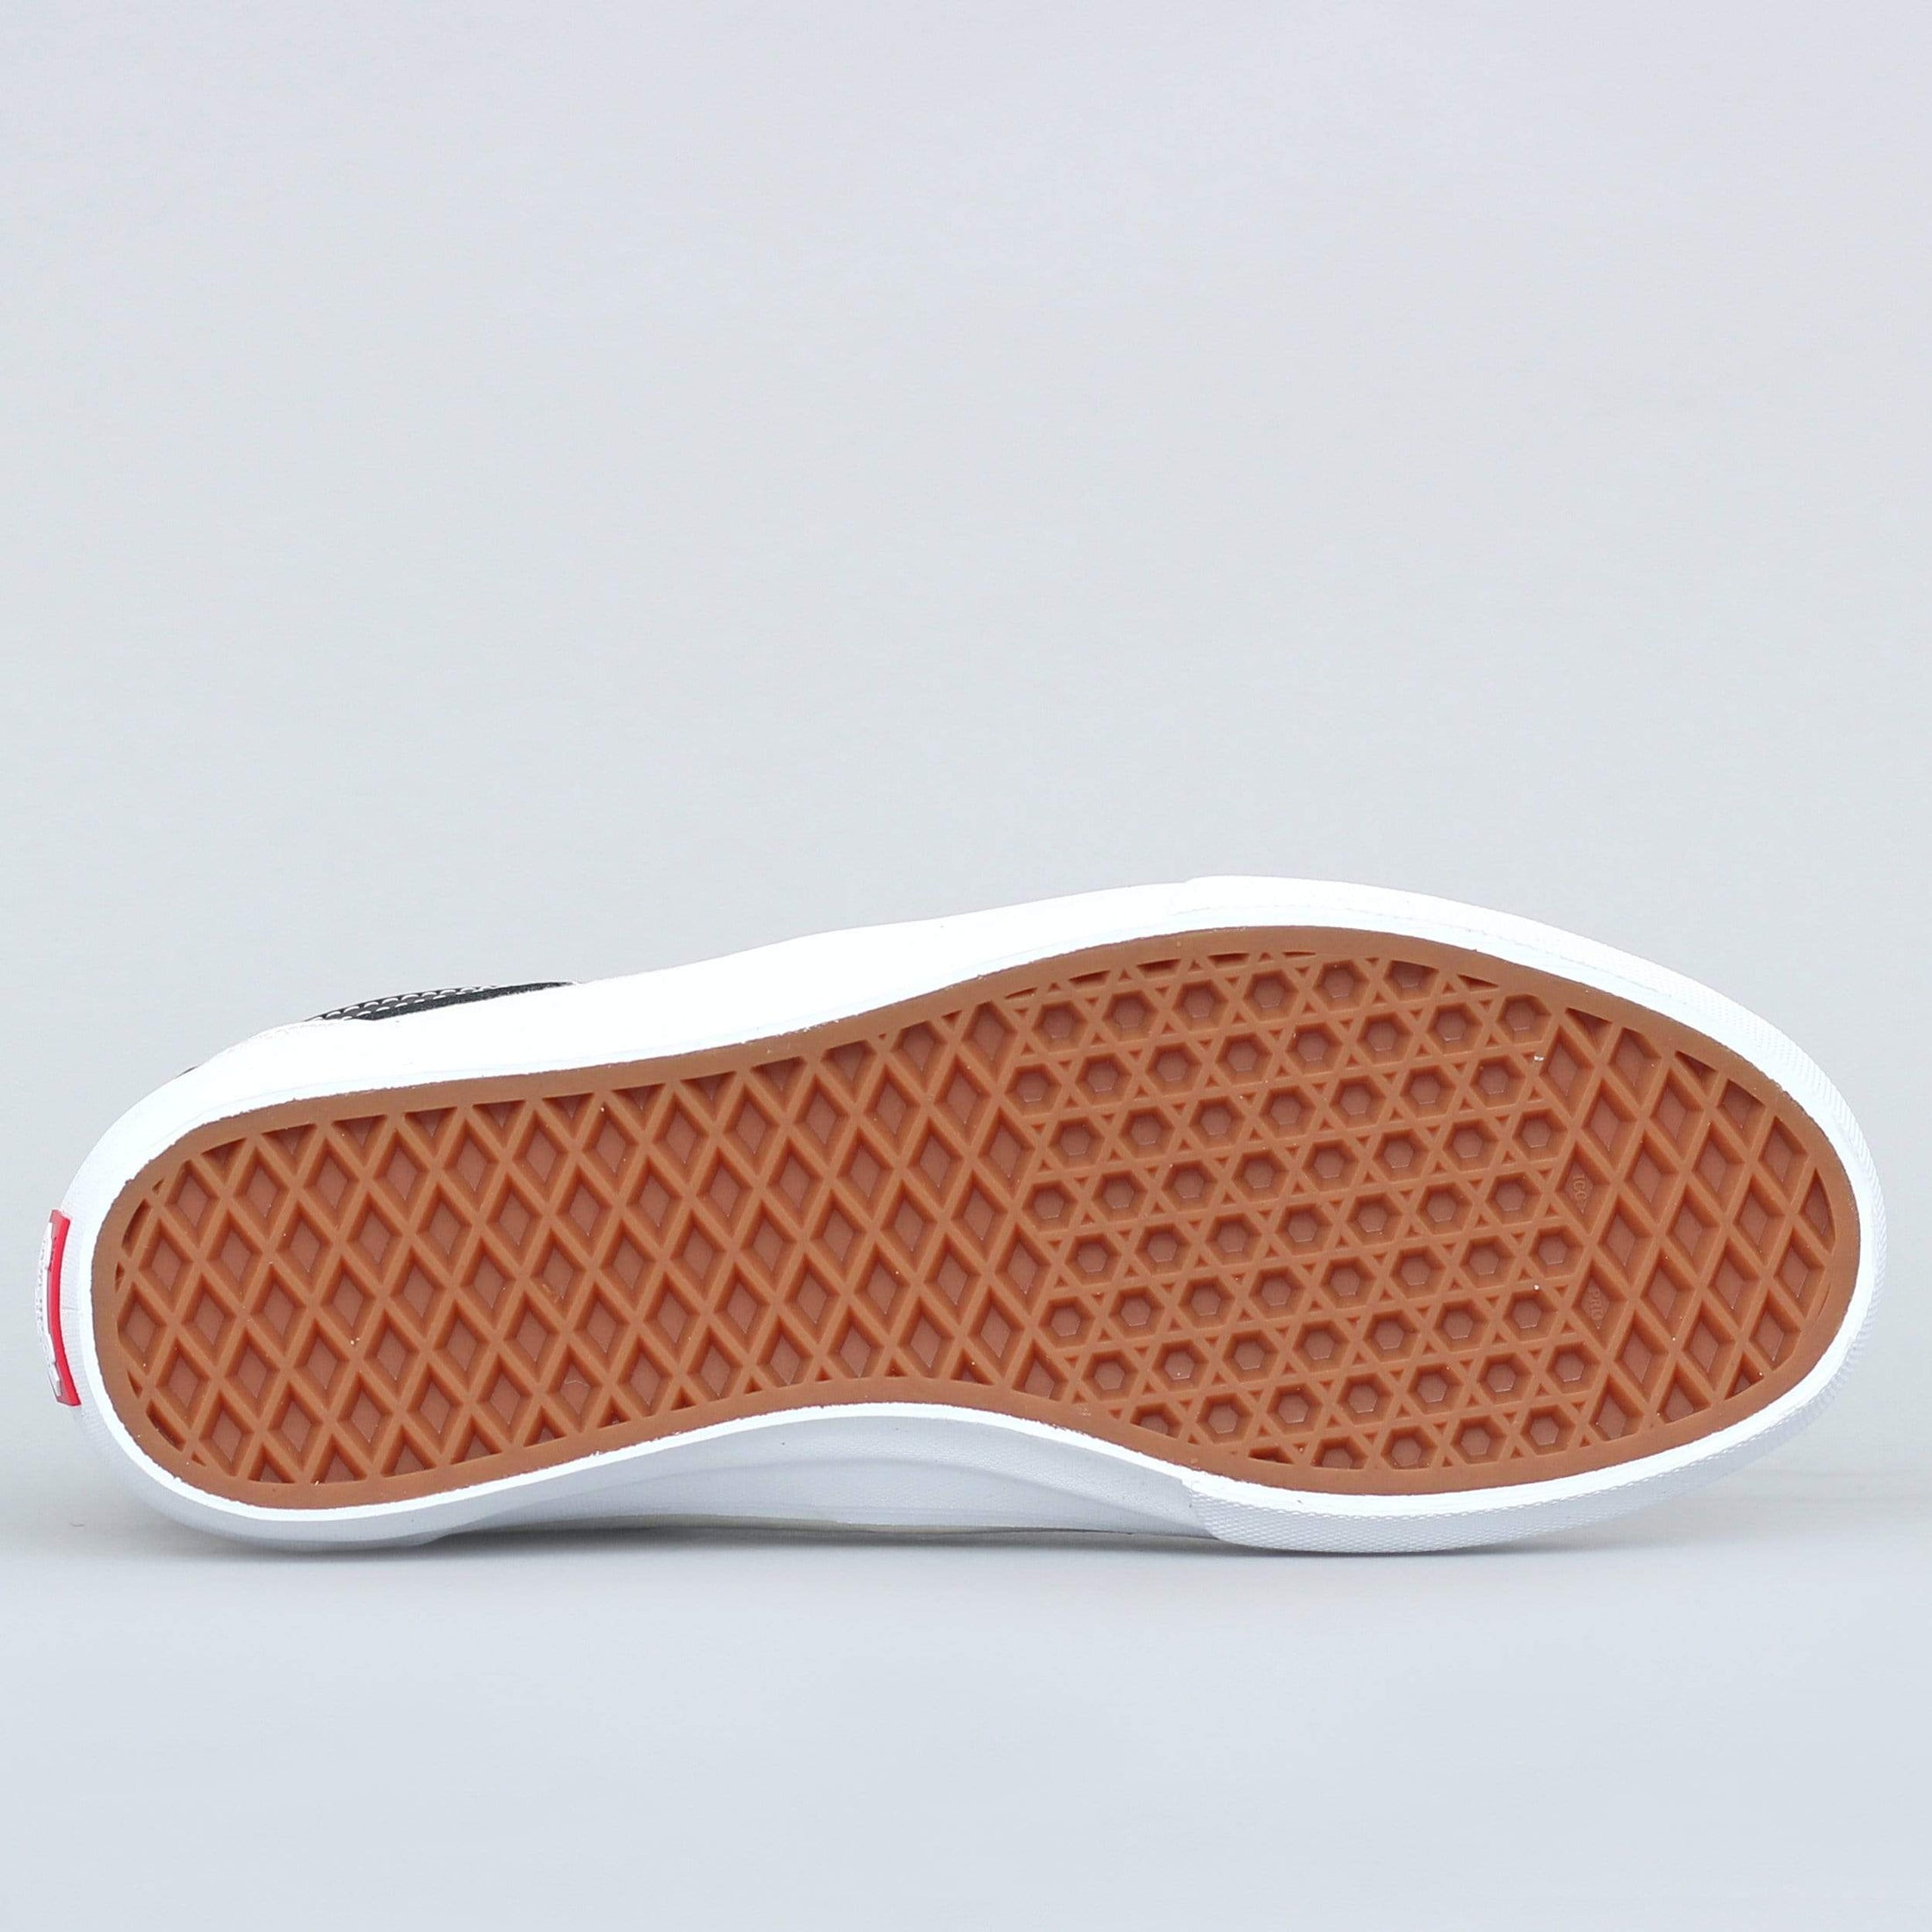 Vans Chima Pro 2 Shoes (Covert) Marshmallow / Black